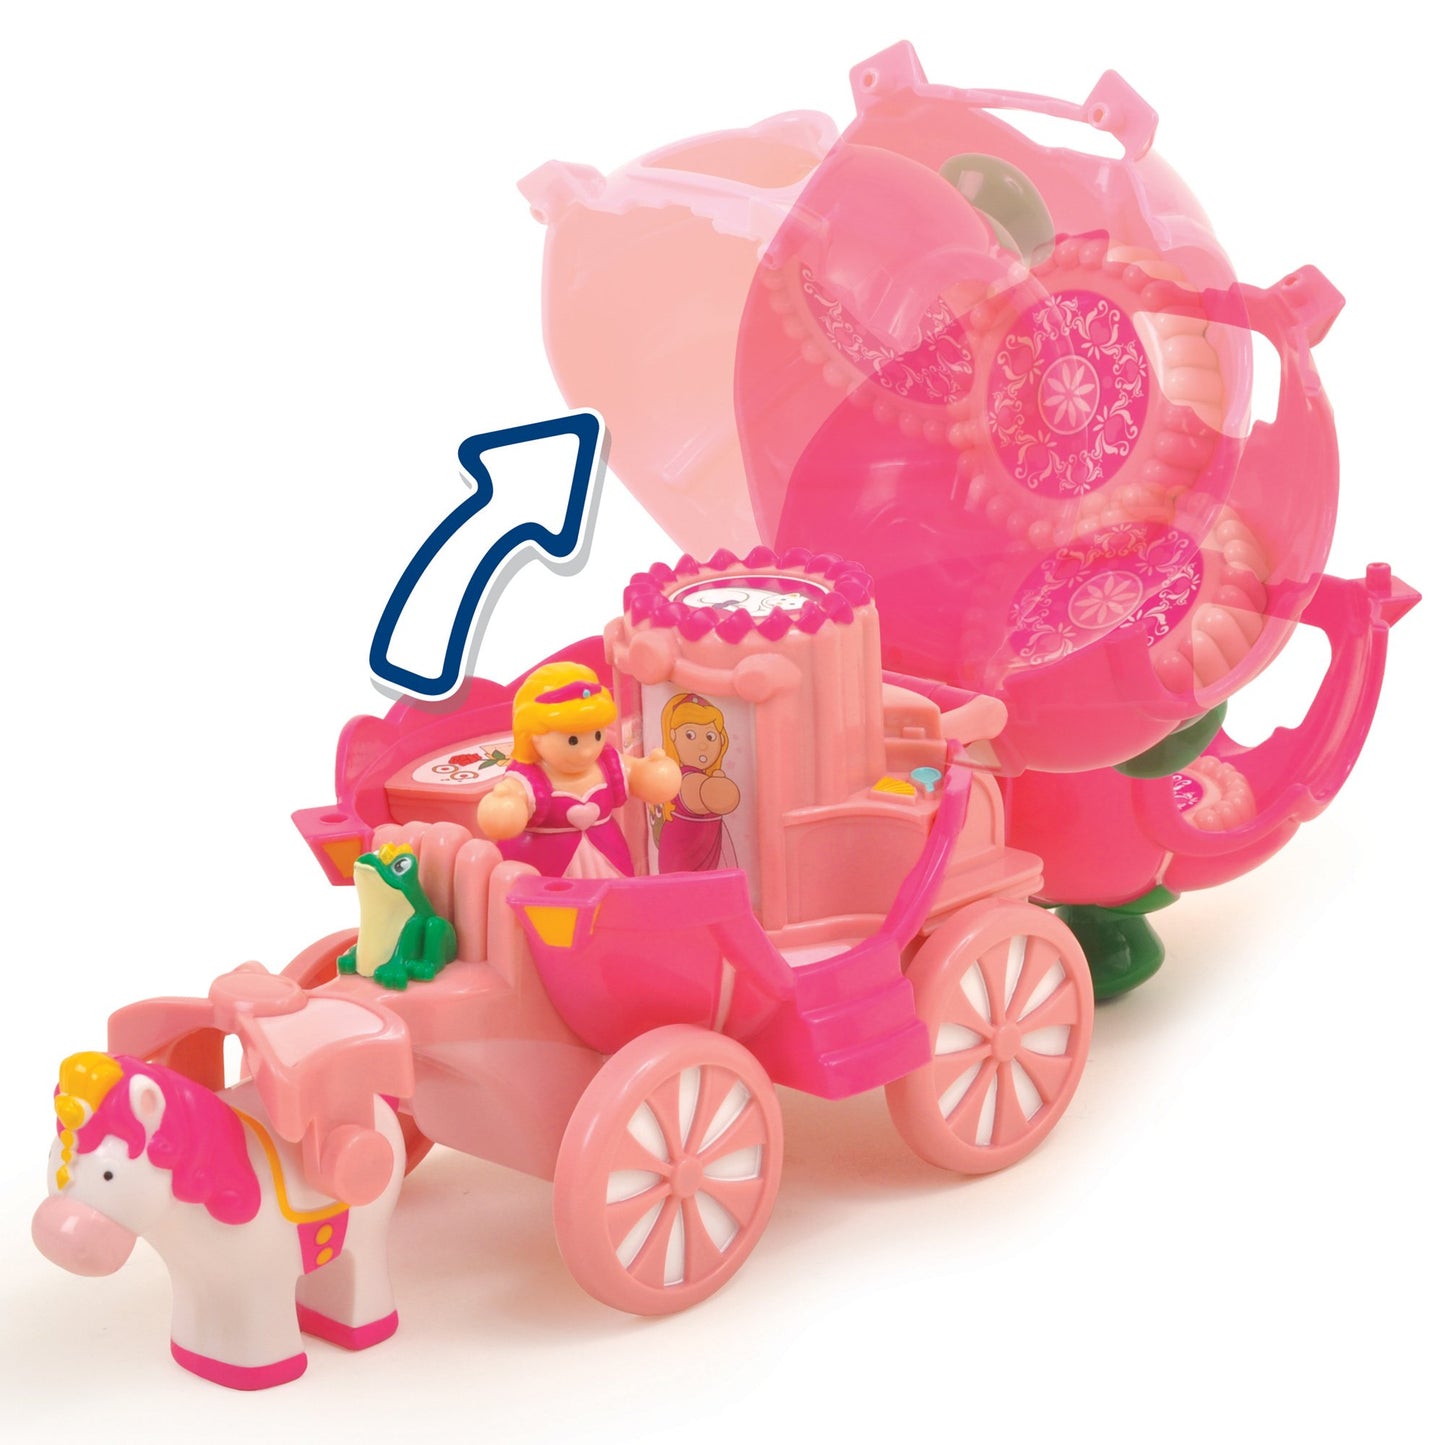 WOW Toys Pippa's Princess Carriage